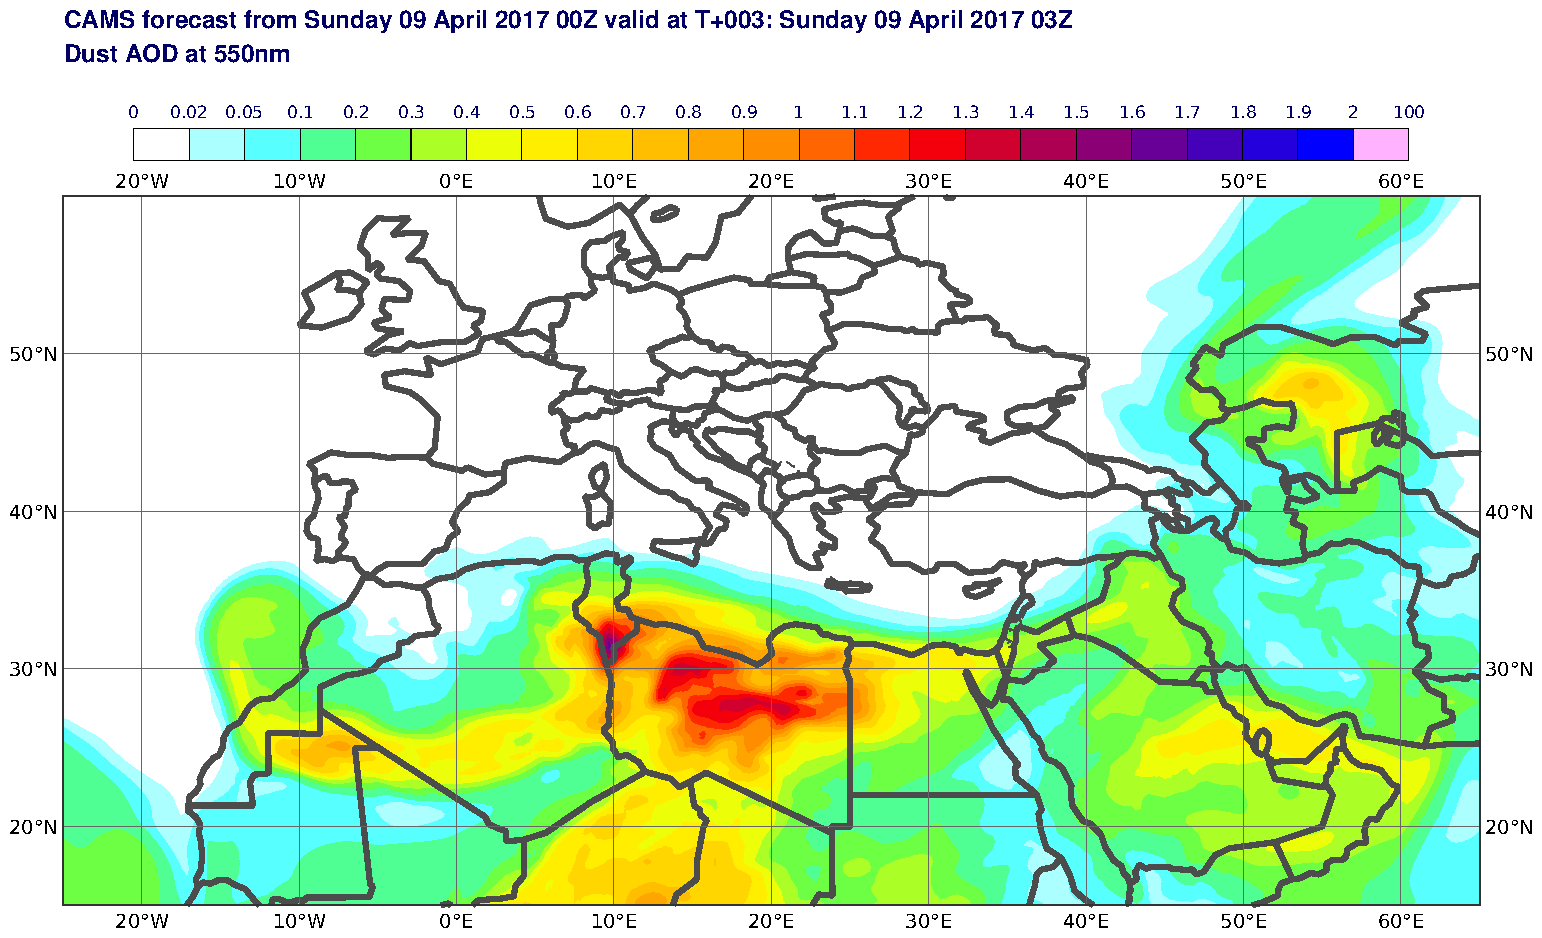 Dust AOD at 550nm valid at T3 - 2017-04-09 03:00